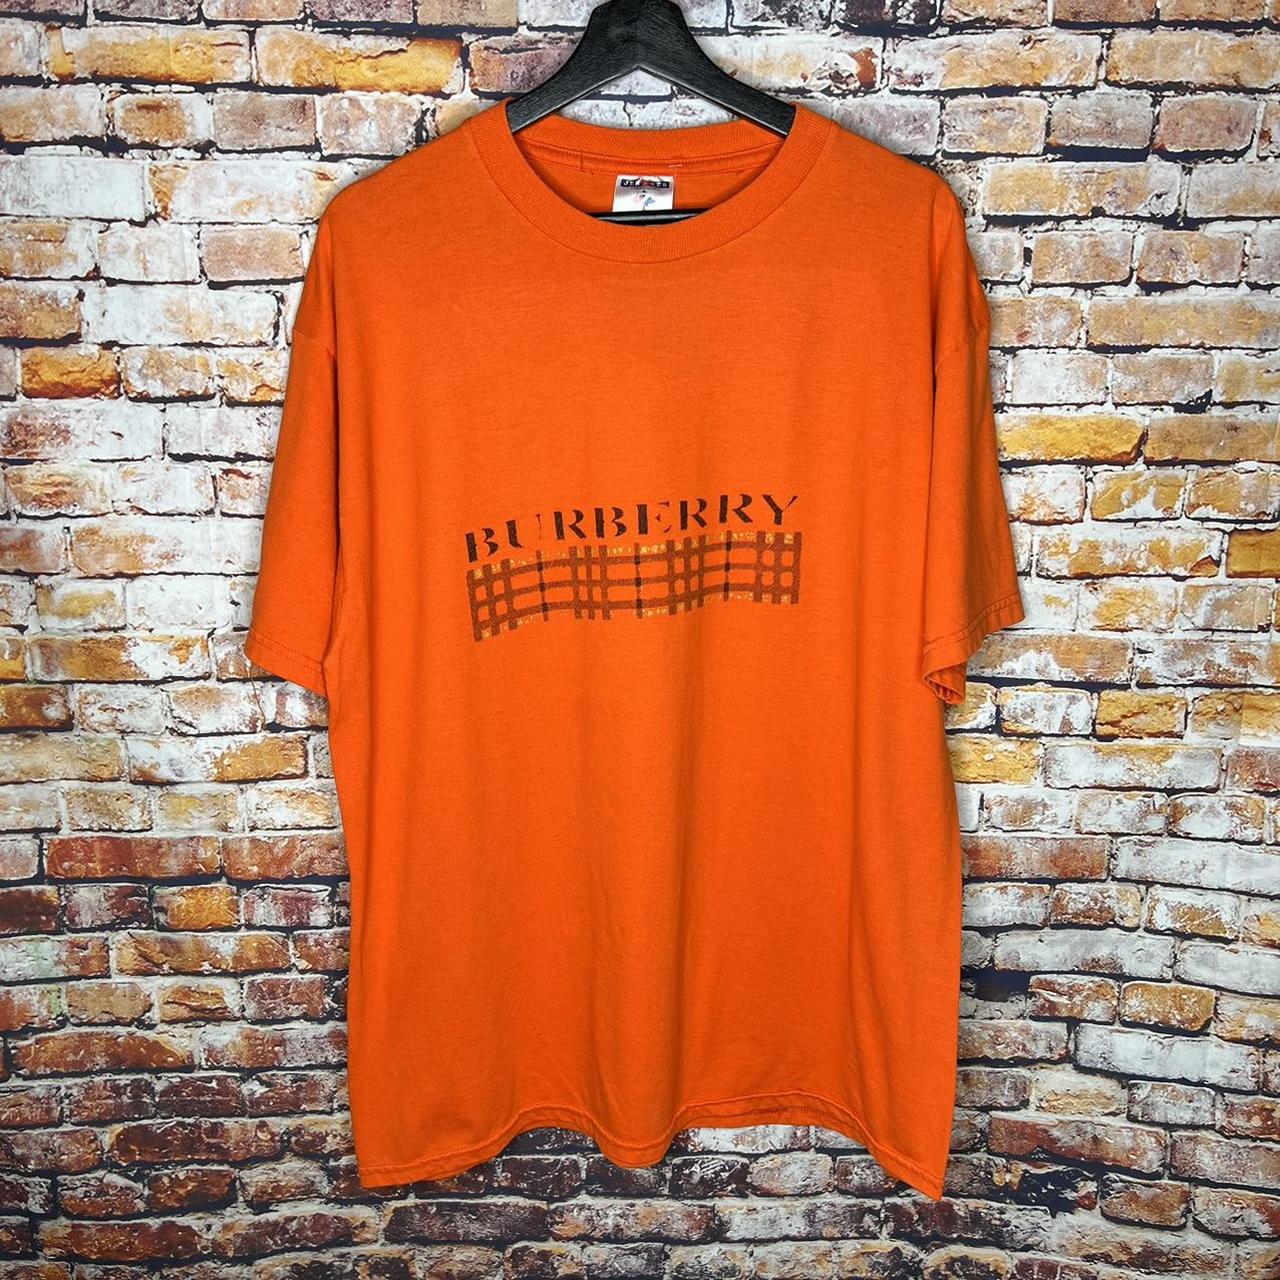 Burberry Men's Orange T-shirt | Depop